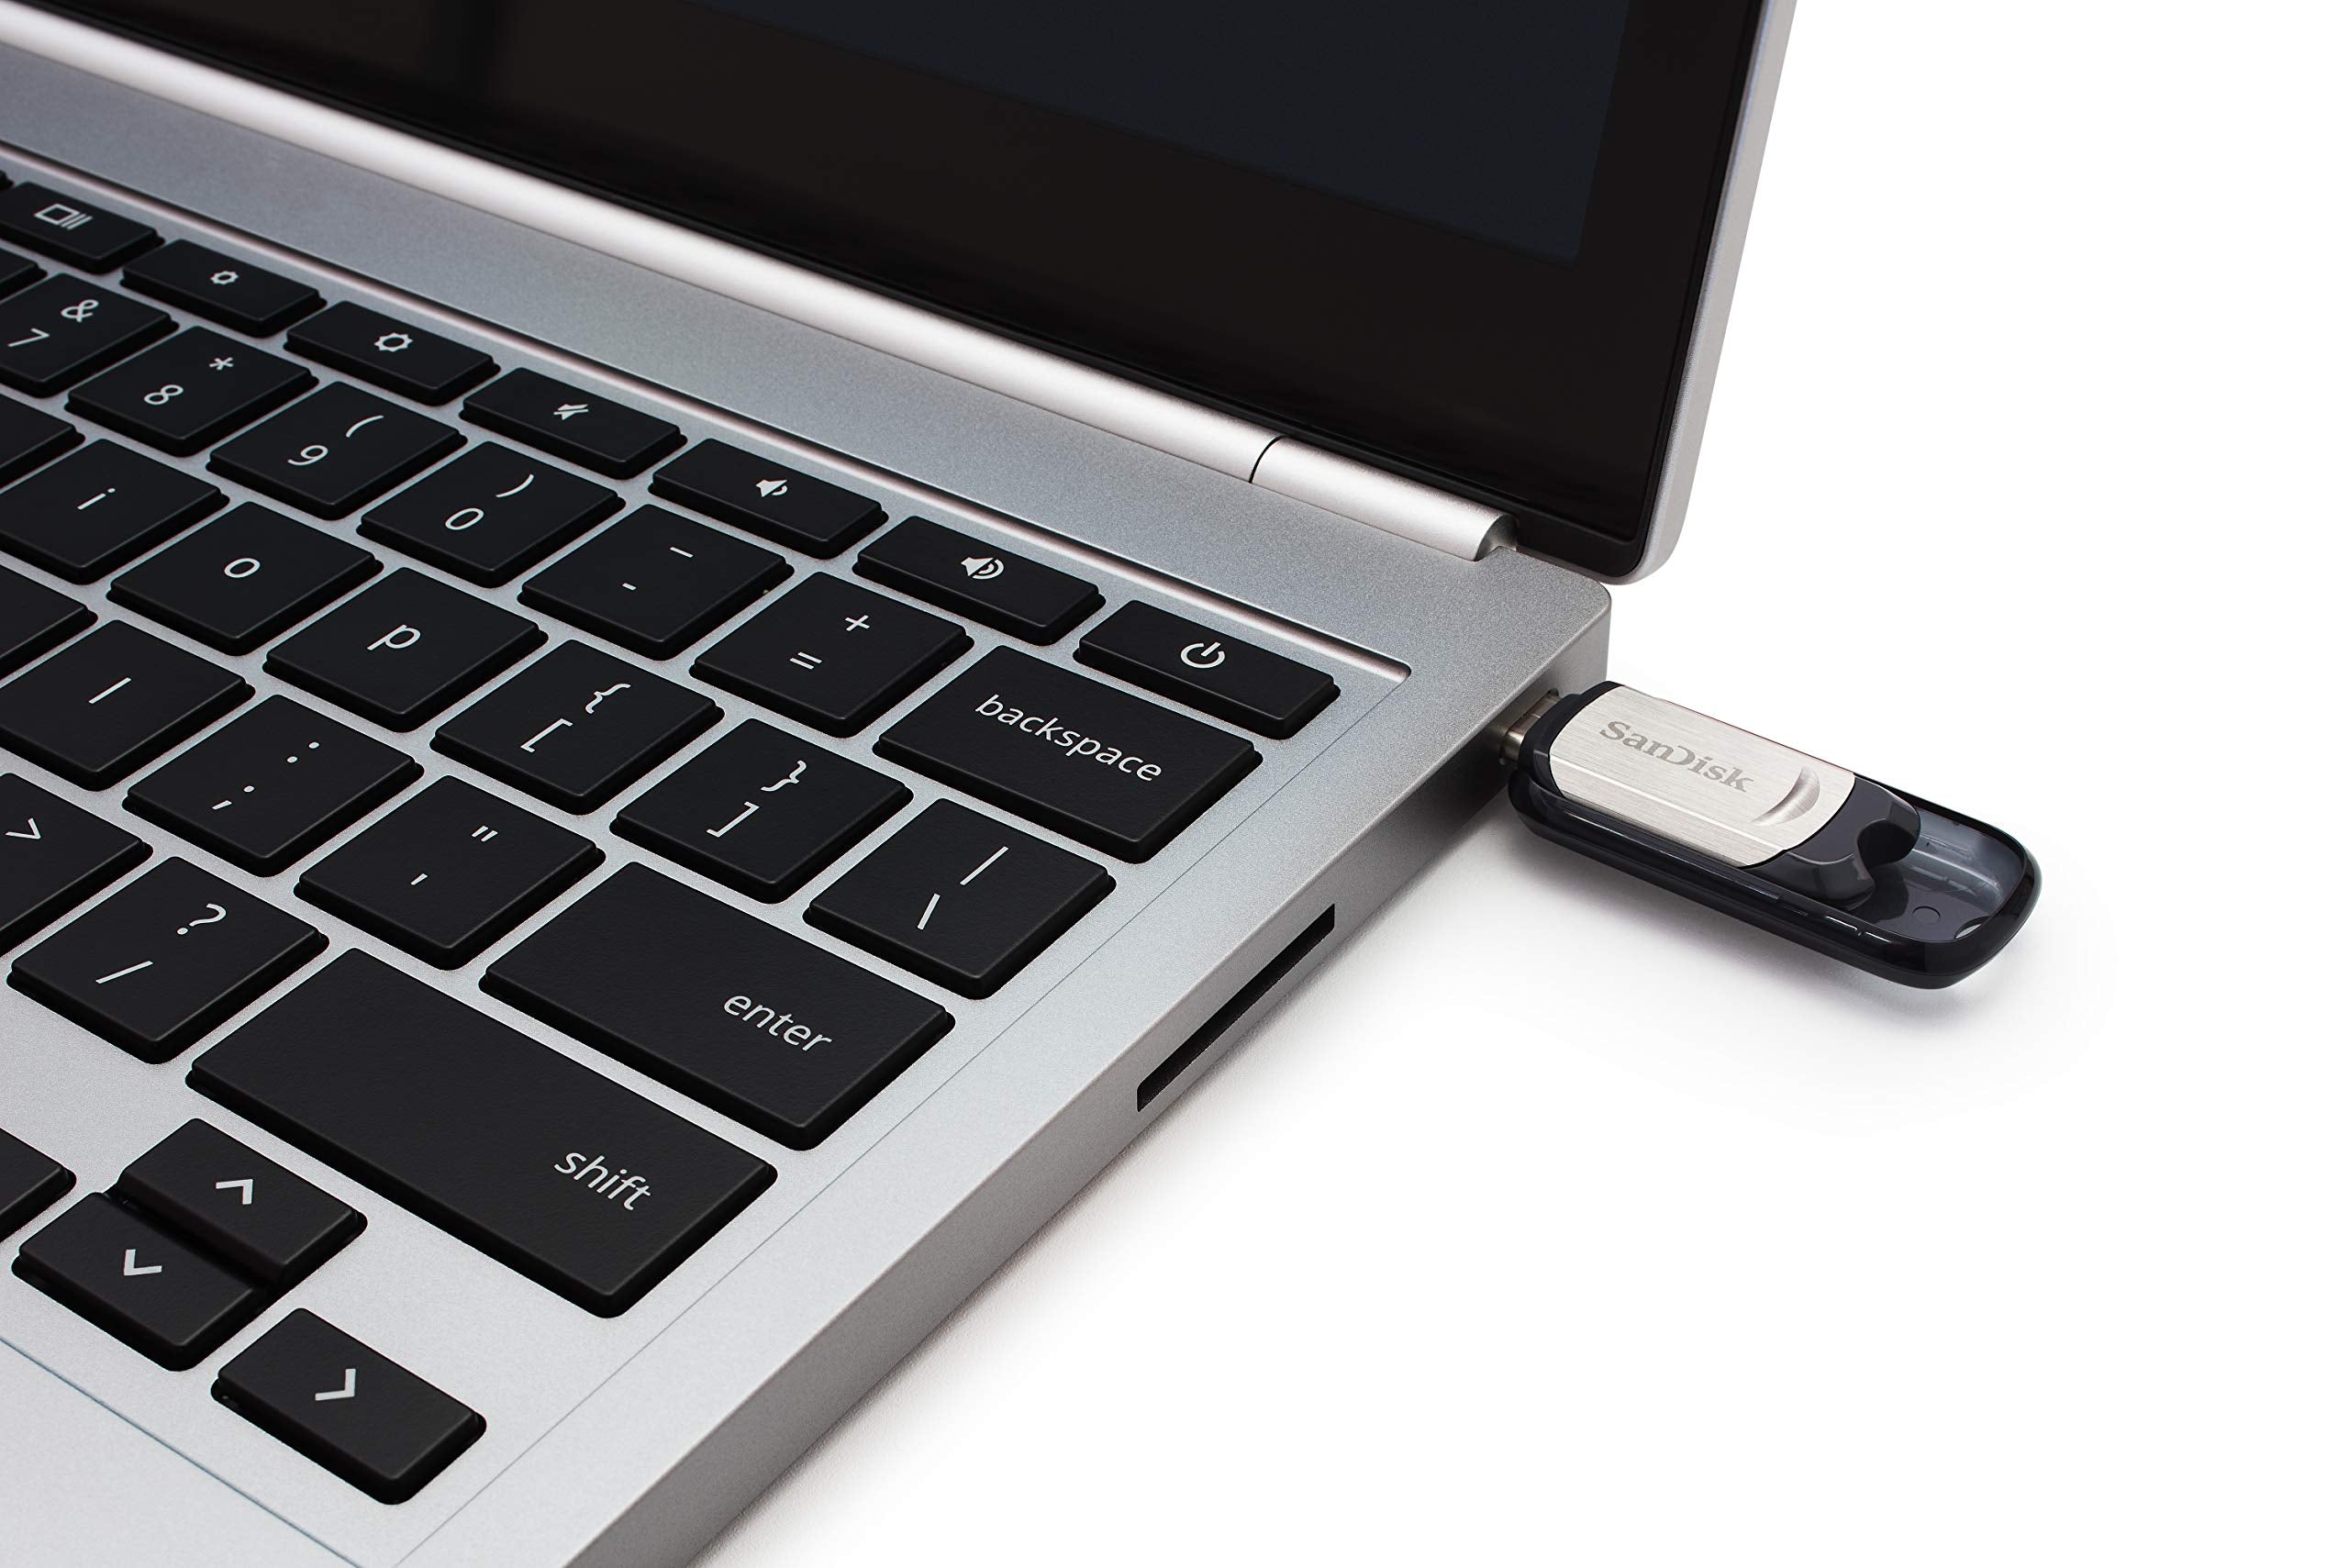 SanDisk Ultra USB 3.0 Type-C 64GB Flash Drive (SDCZ450-064G-G46)